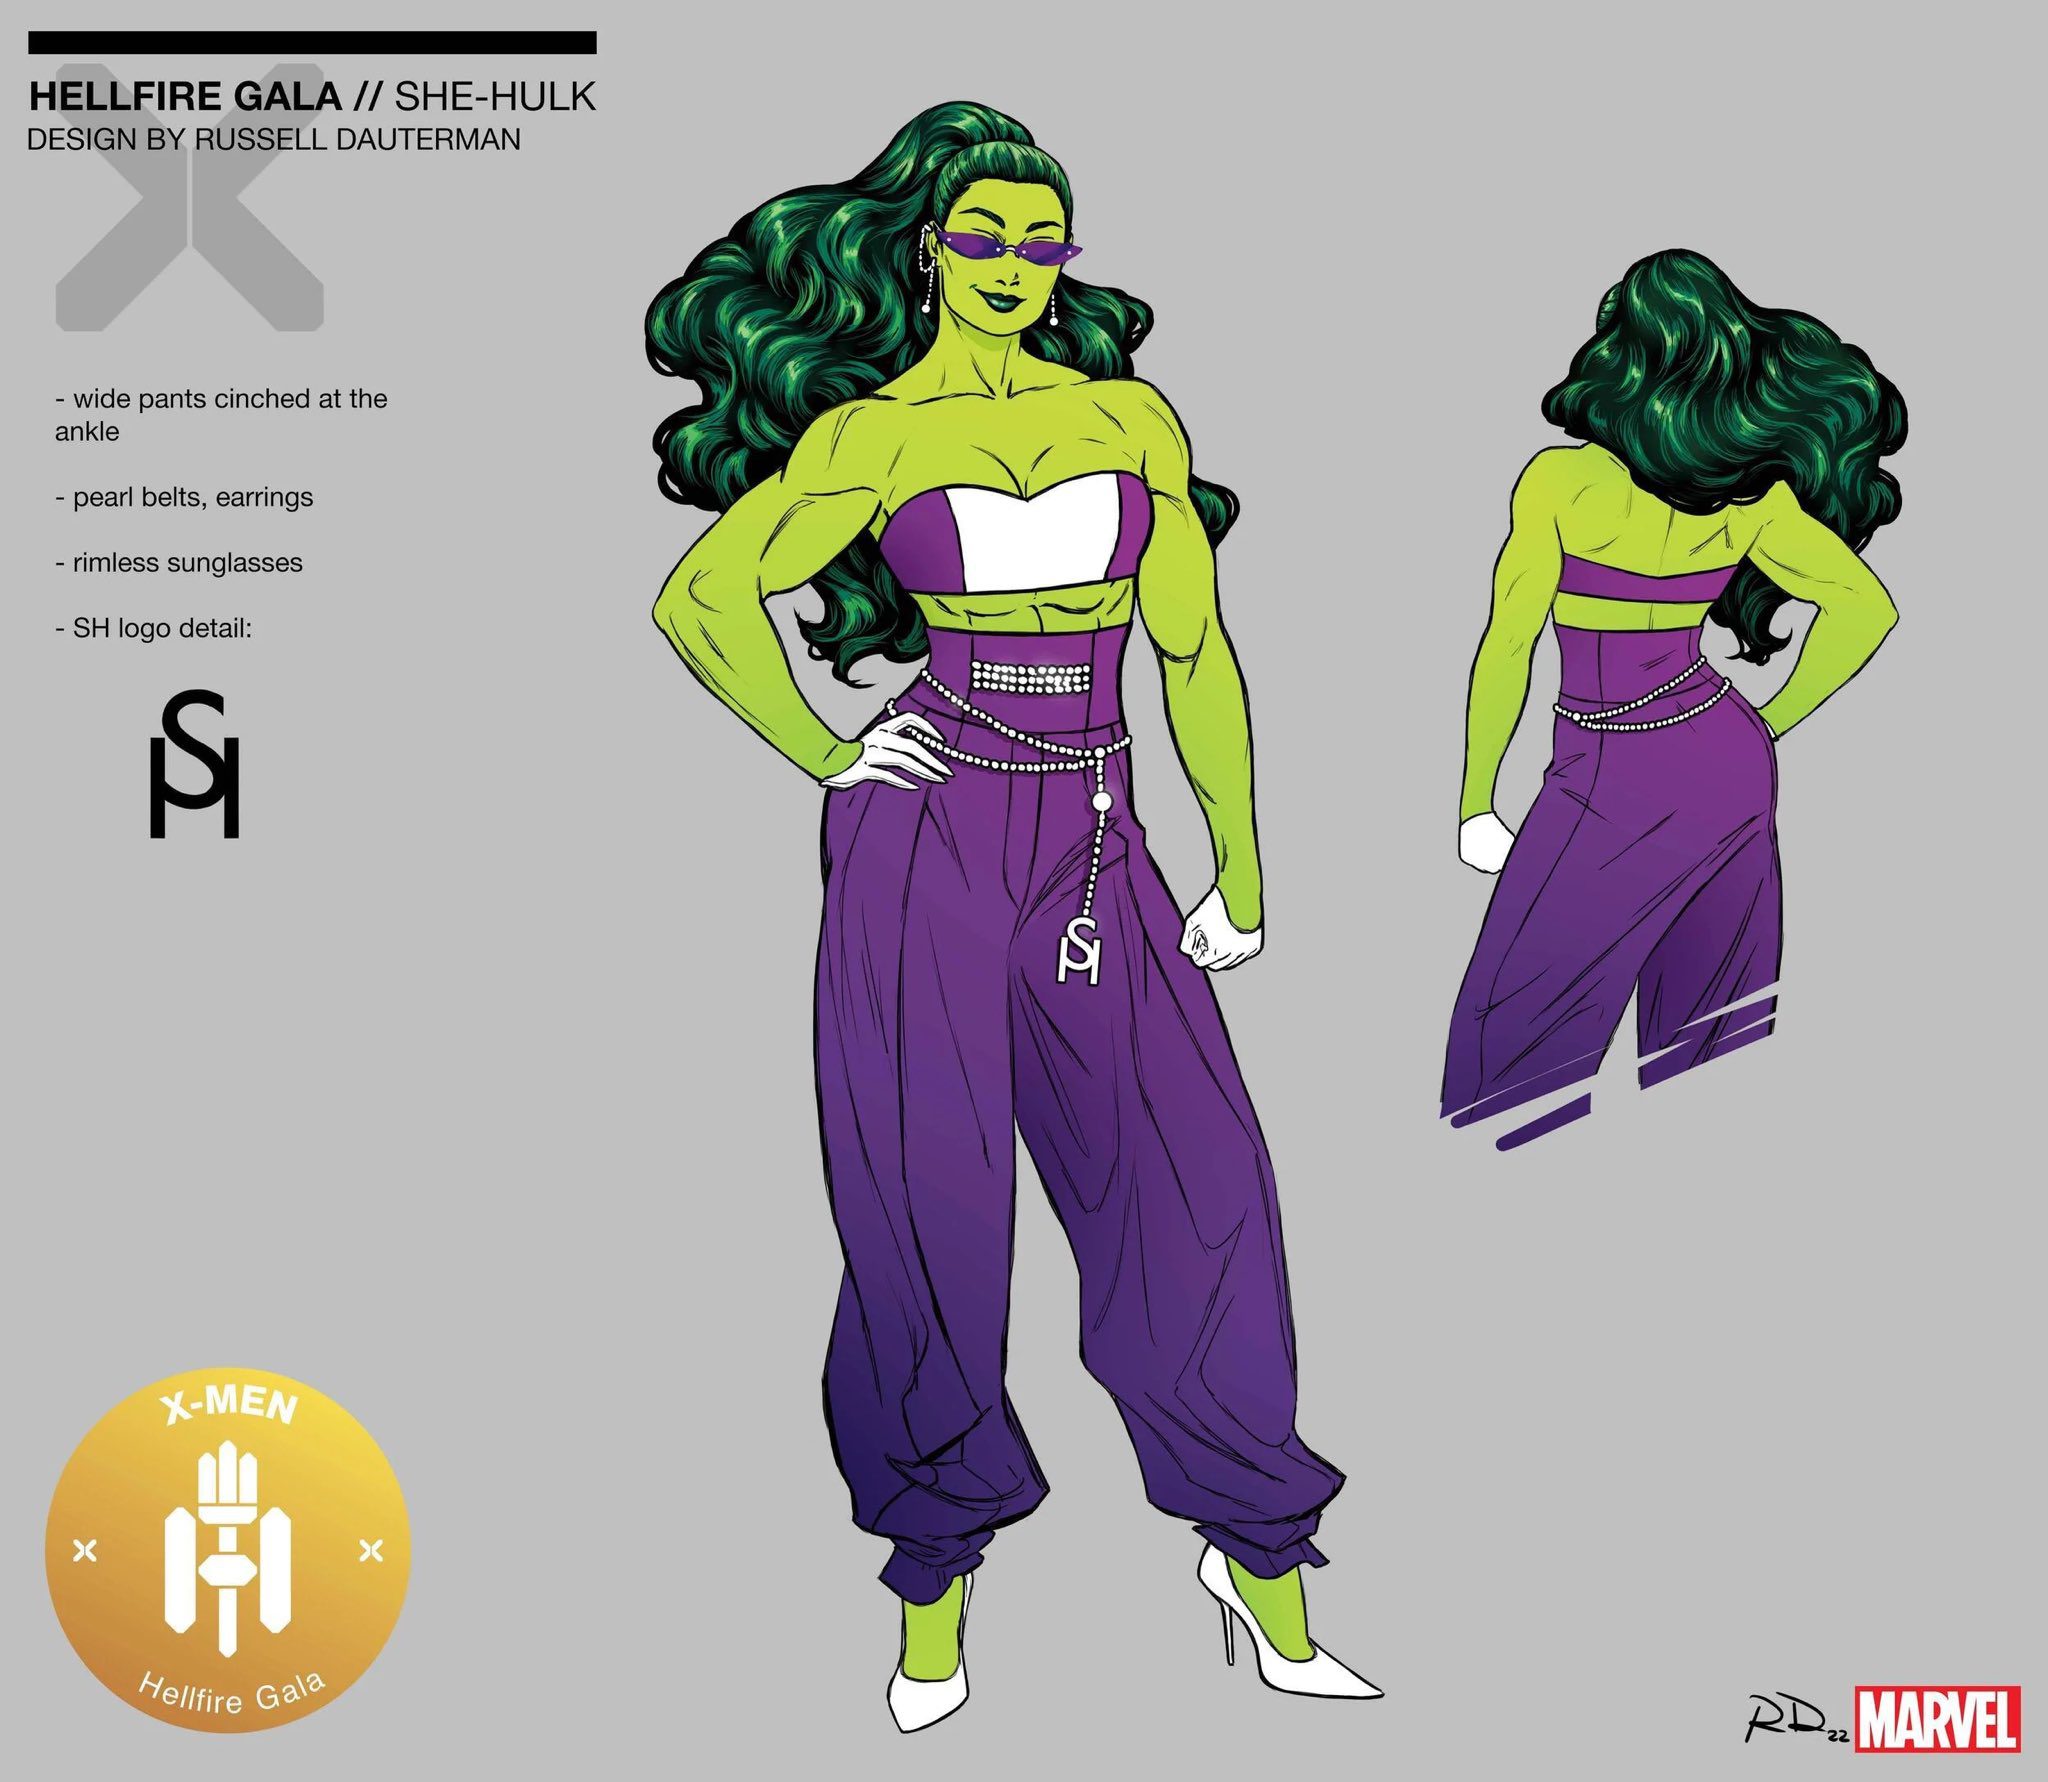 She-Hulk Hellfire Gala look